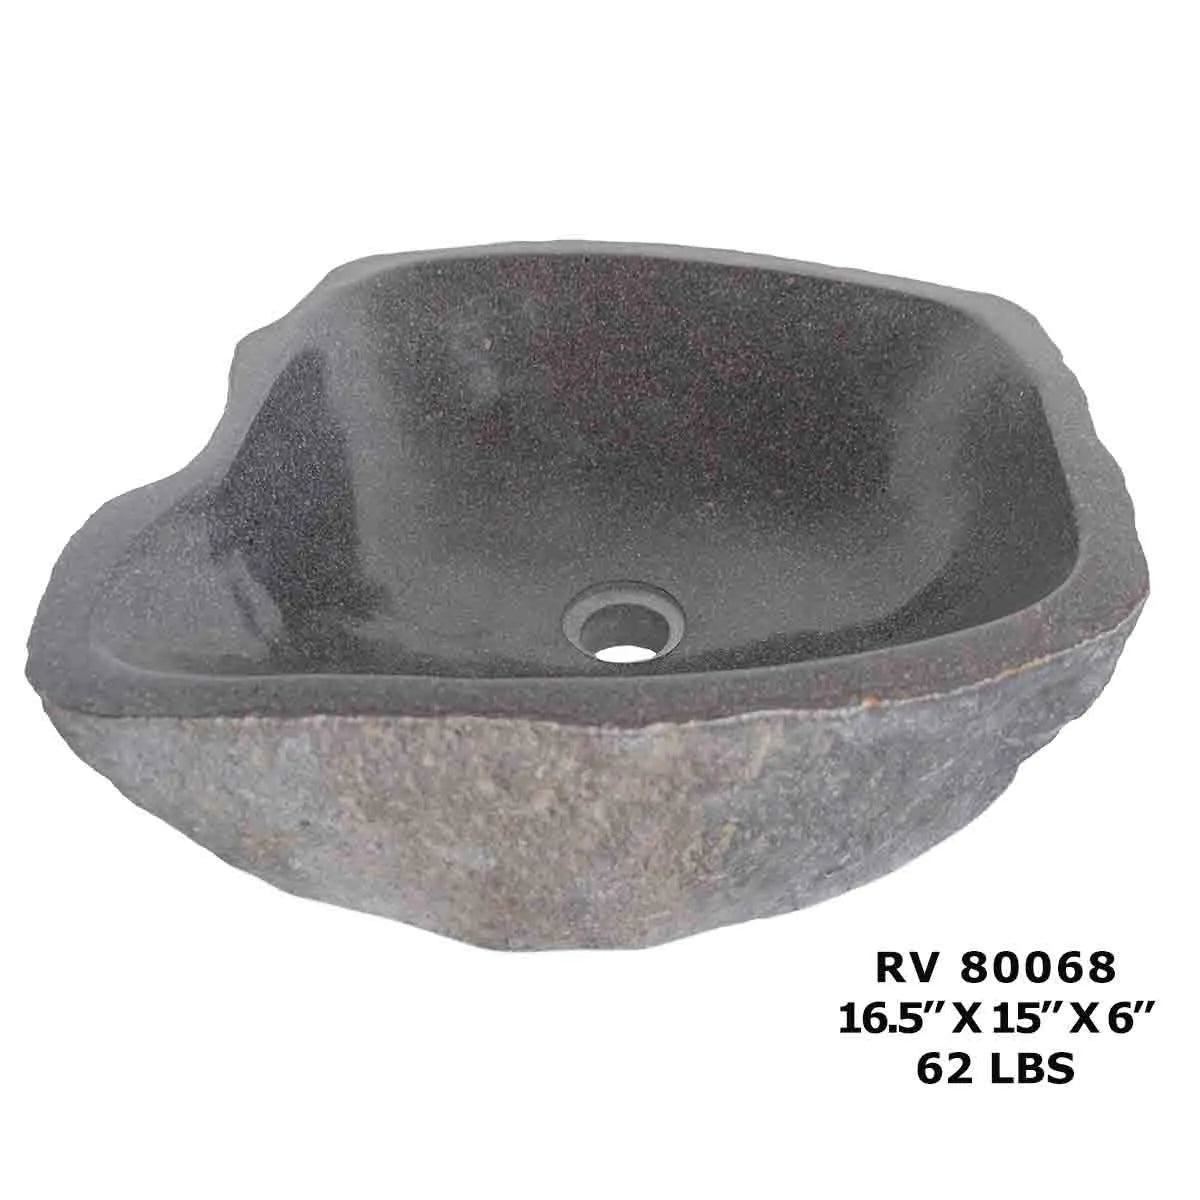 RV80068-Natural Riverstone Stone Vessel Sink for Bathroom